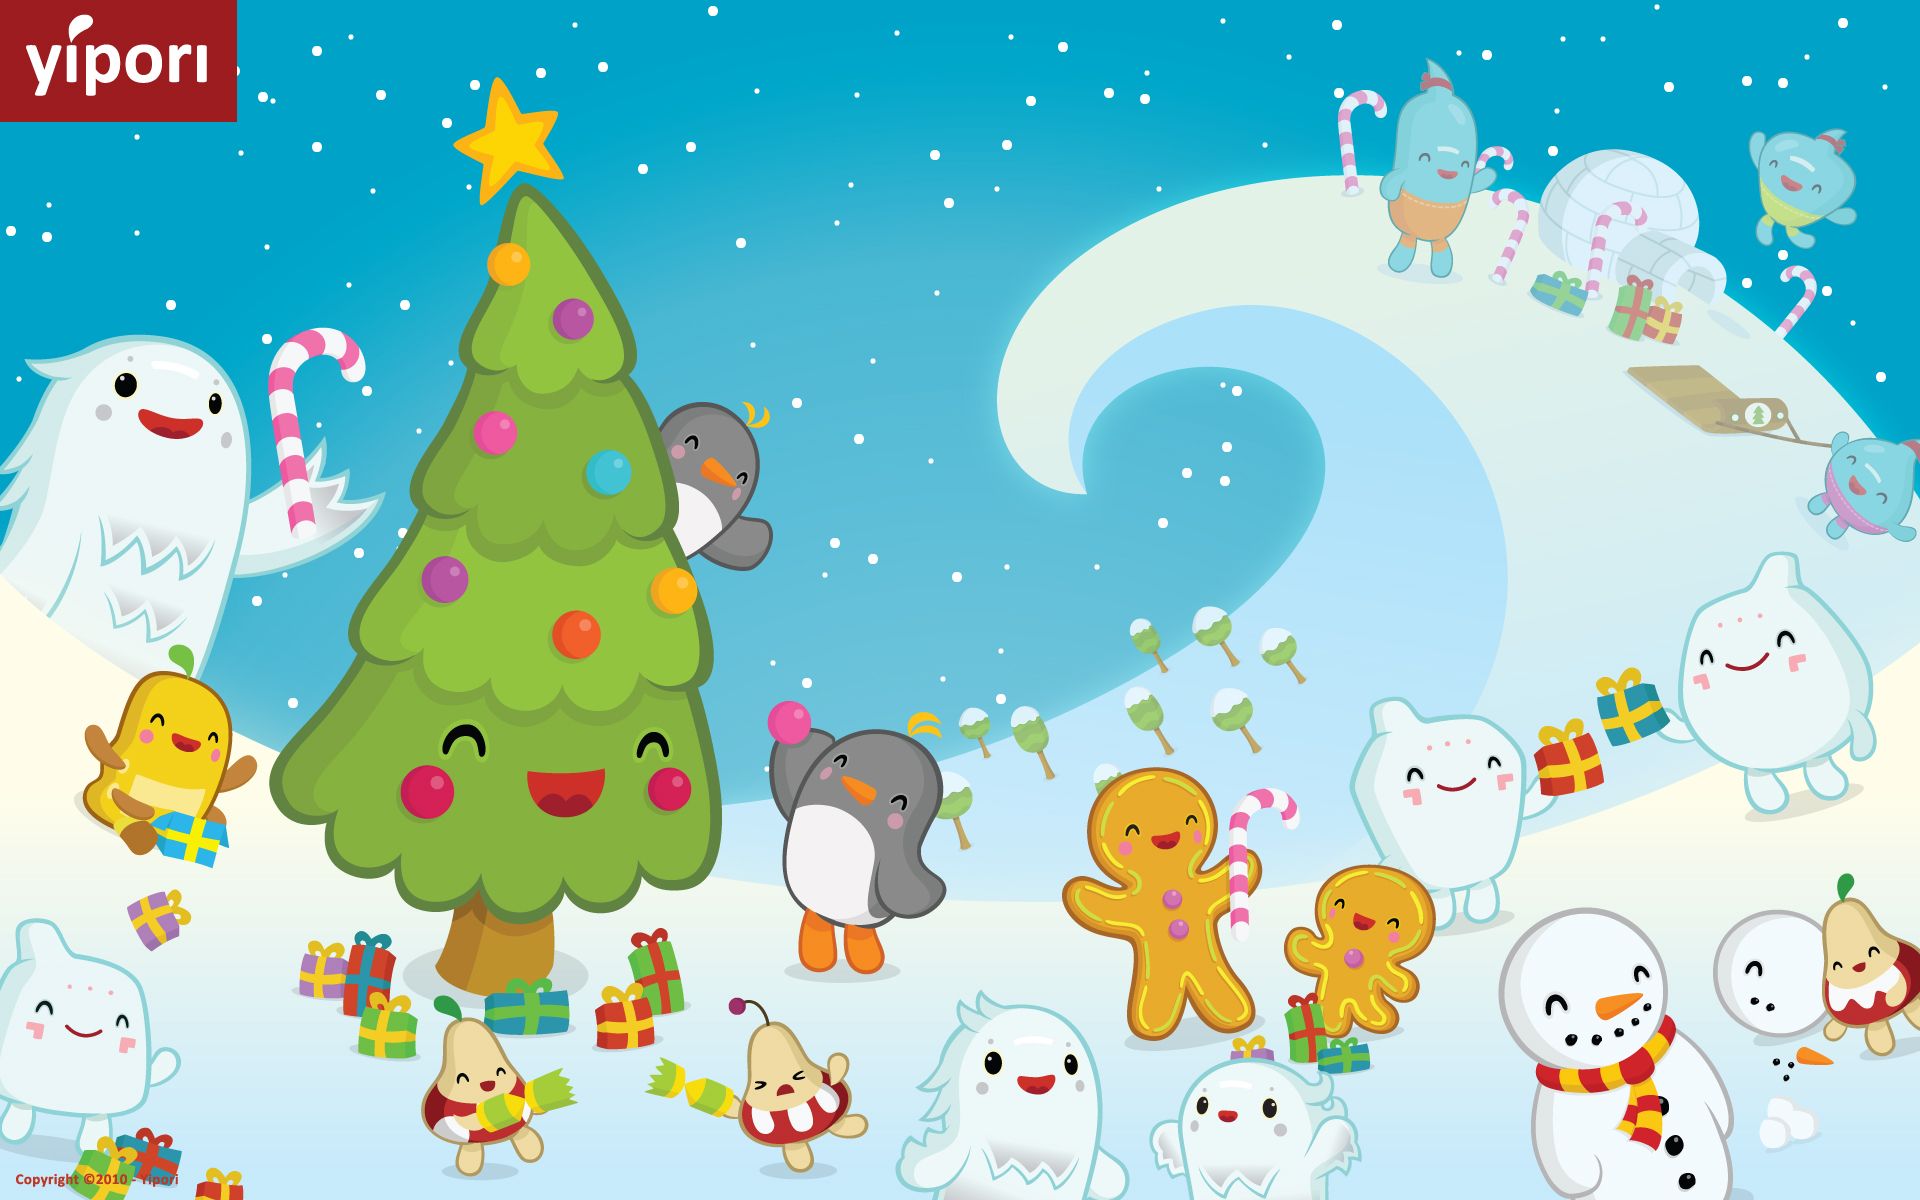 Super Cute Cute Christmas Wallpaper For Desktop Image Four